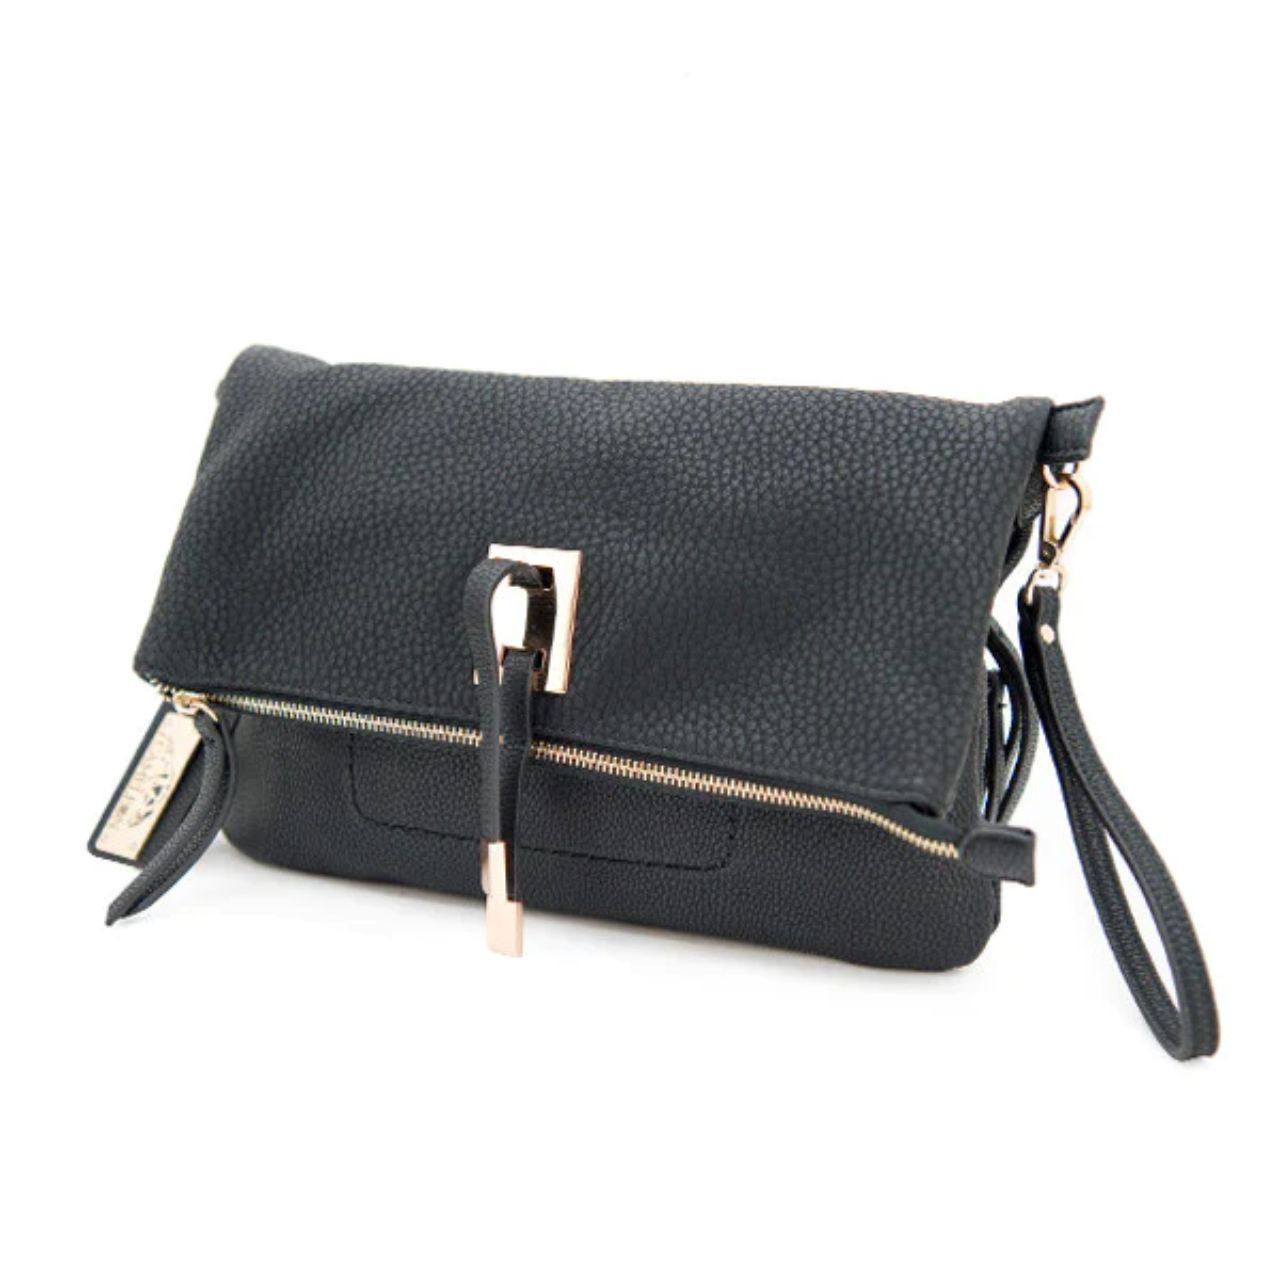 clutch design concealed carry purse